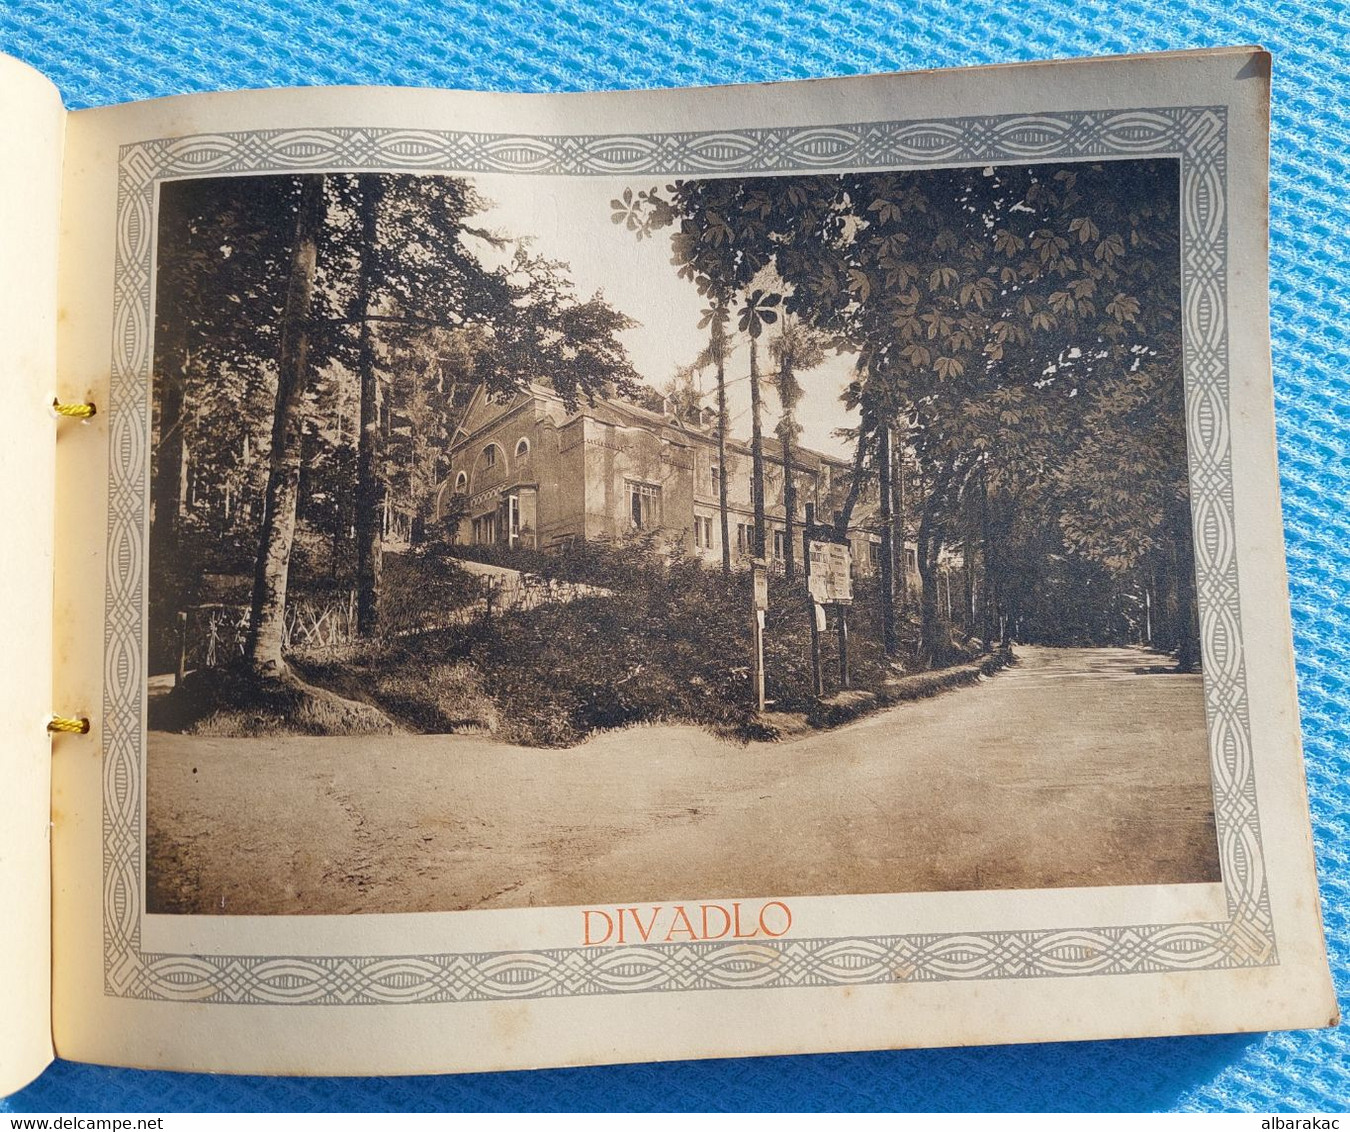 Lázně Luhačovice - Zlin region ,Old Album with 18 picture ,cca 1920, Slovacka Buda Slovakia